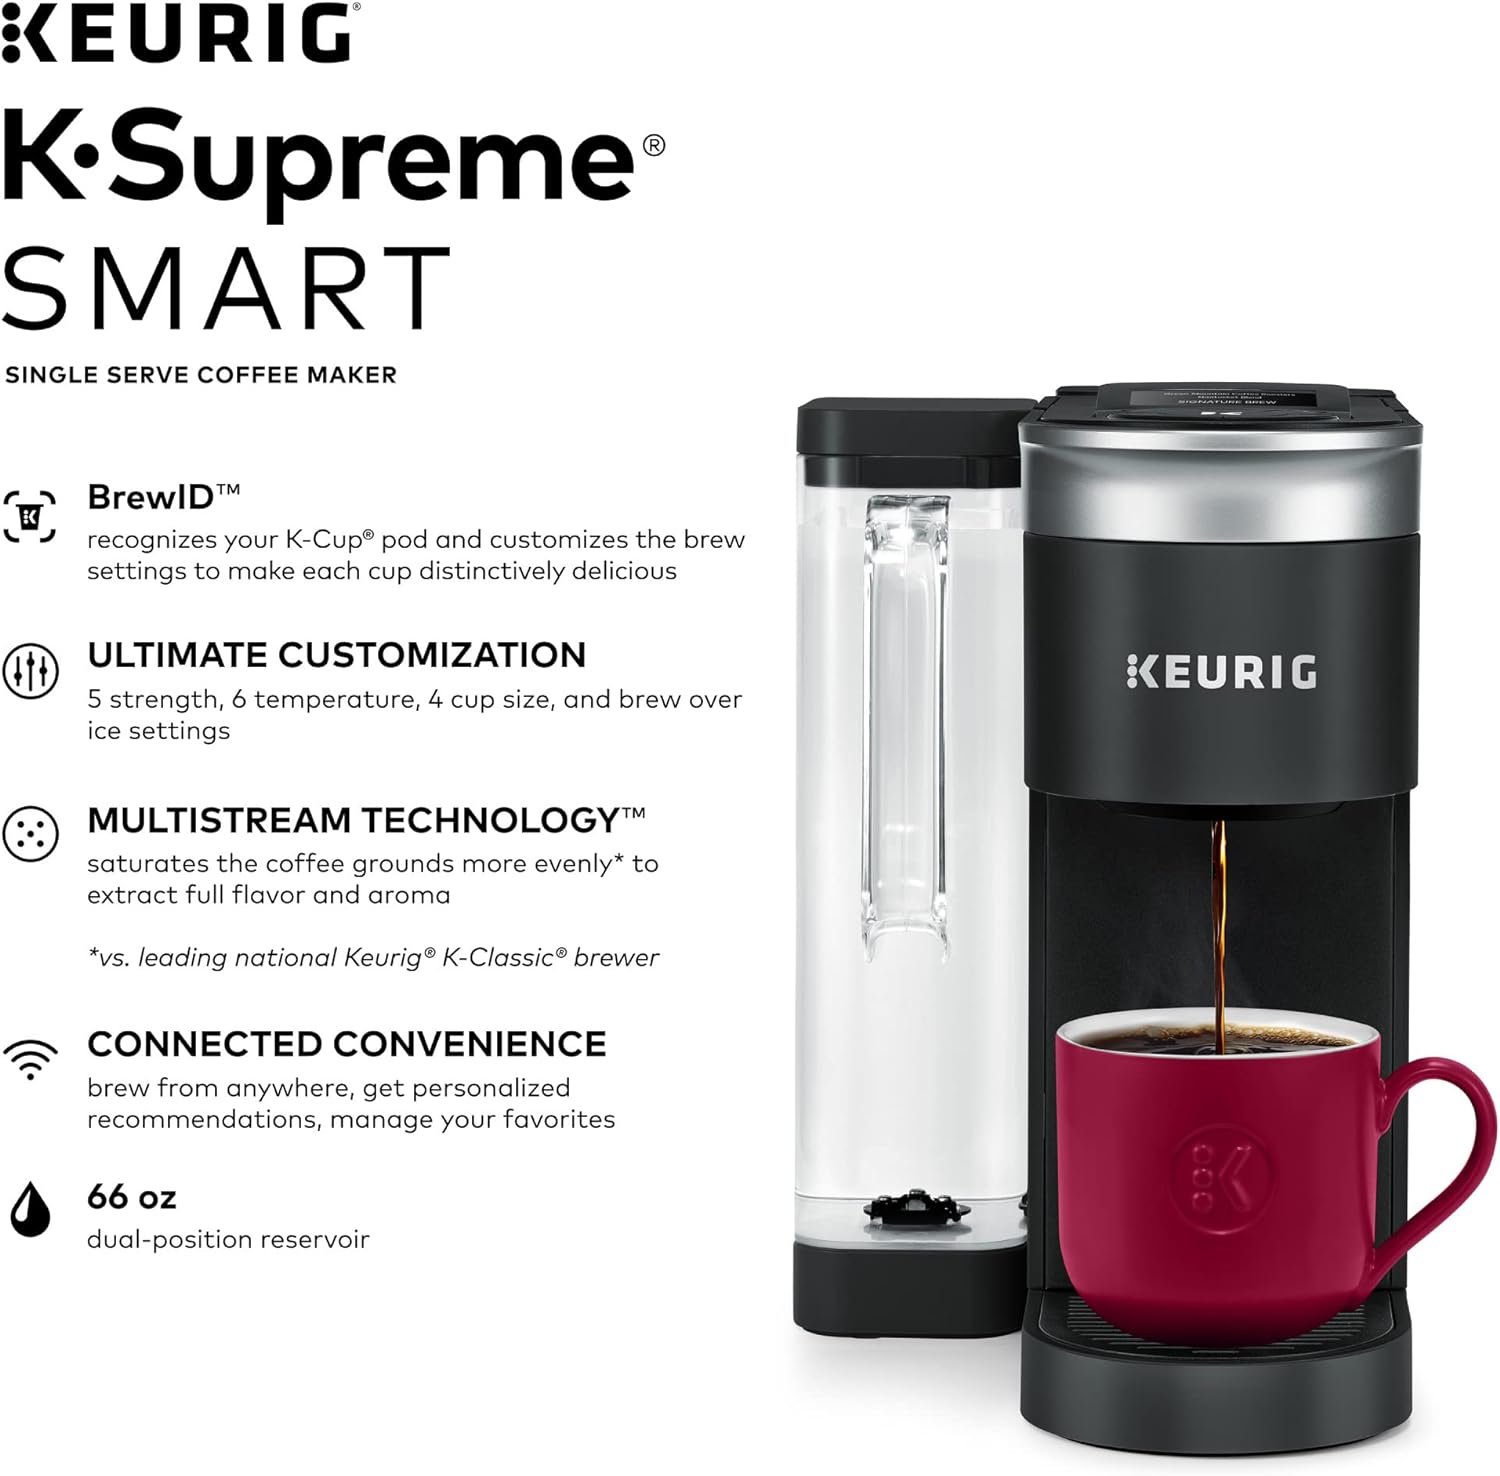 Keurig K-Supreme SMART Coffee Maker Review